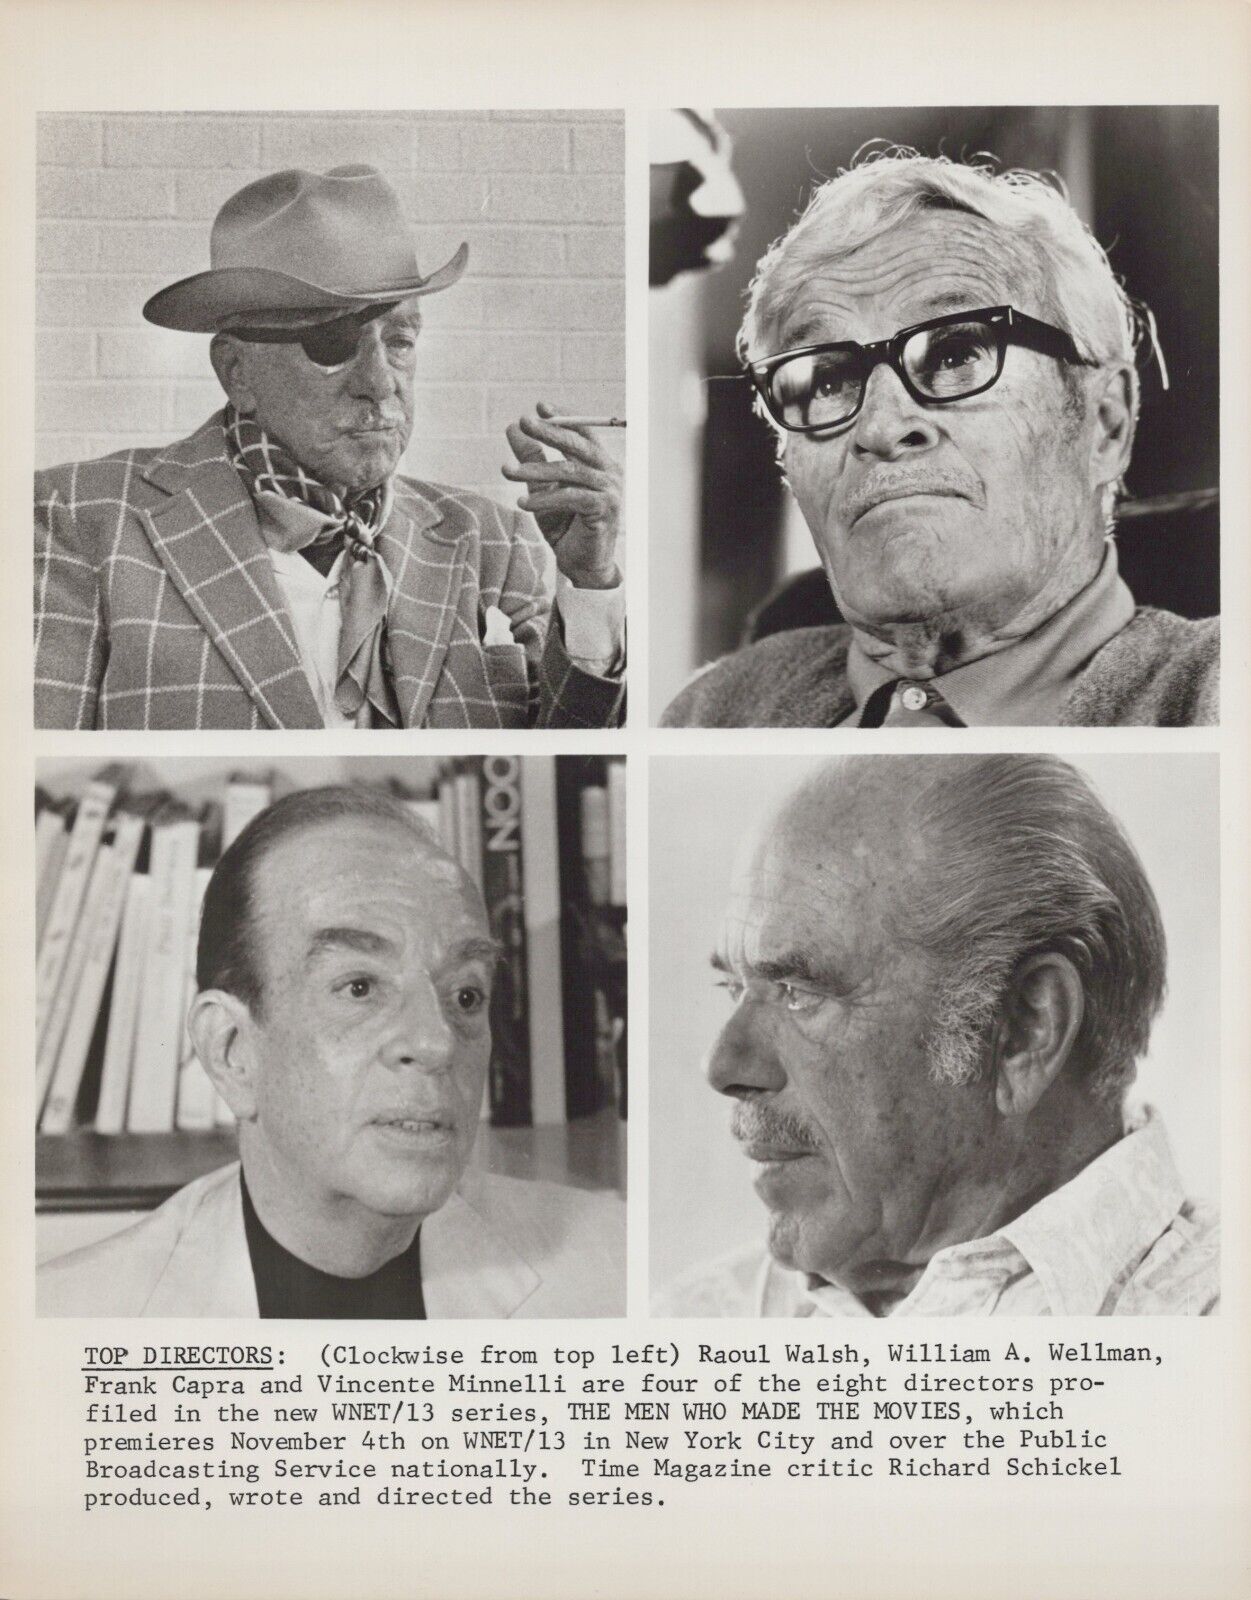 Raoul Walsh + William A. Wellman +Frank Capra +Vincent Minelli 1950s Photo K 315